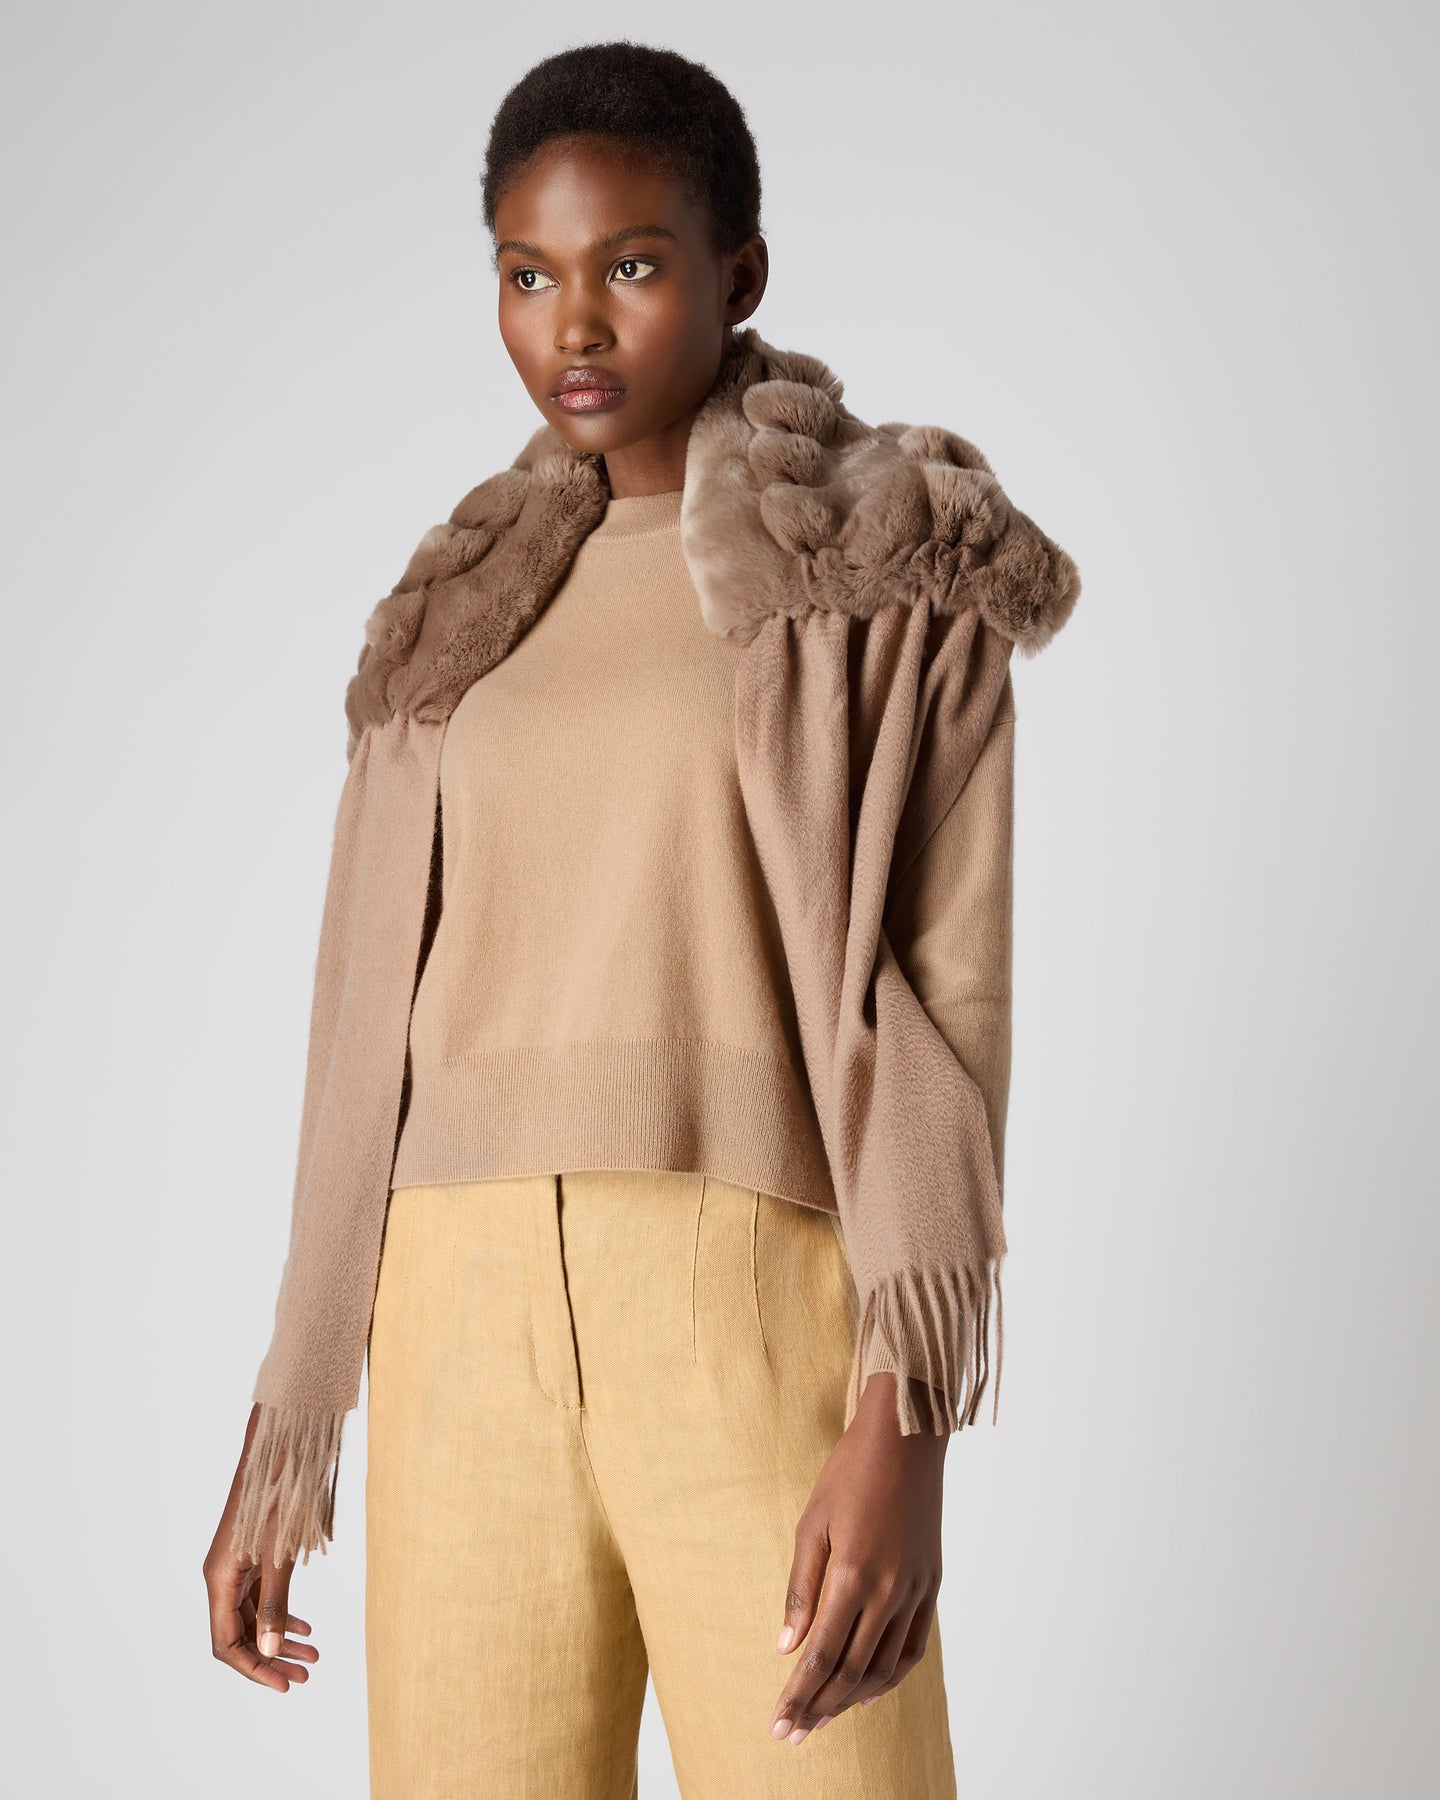 N.Peal Women's Rabbit Fur Scarf Snow Grey, Cashmere Scarves